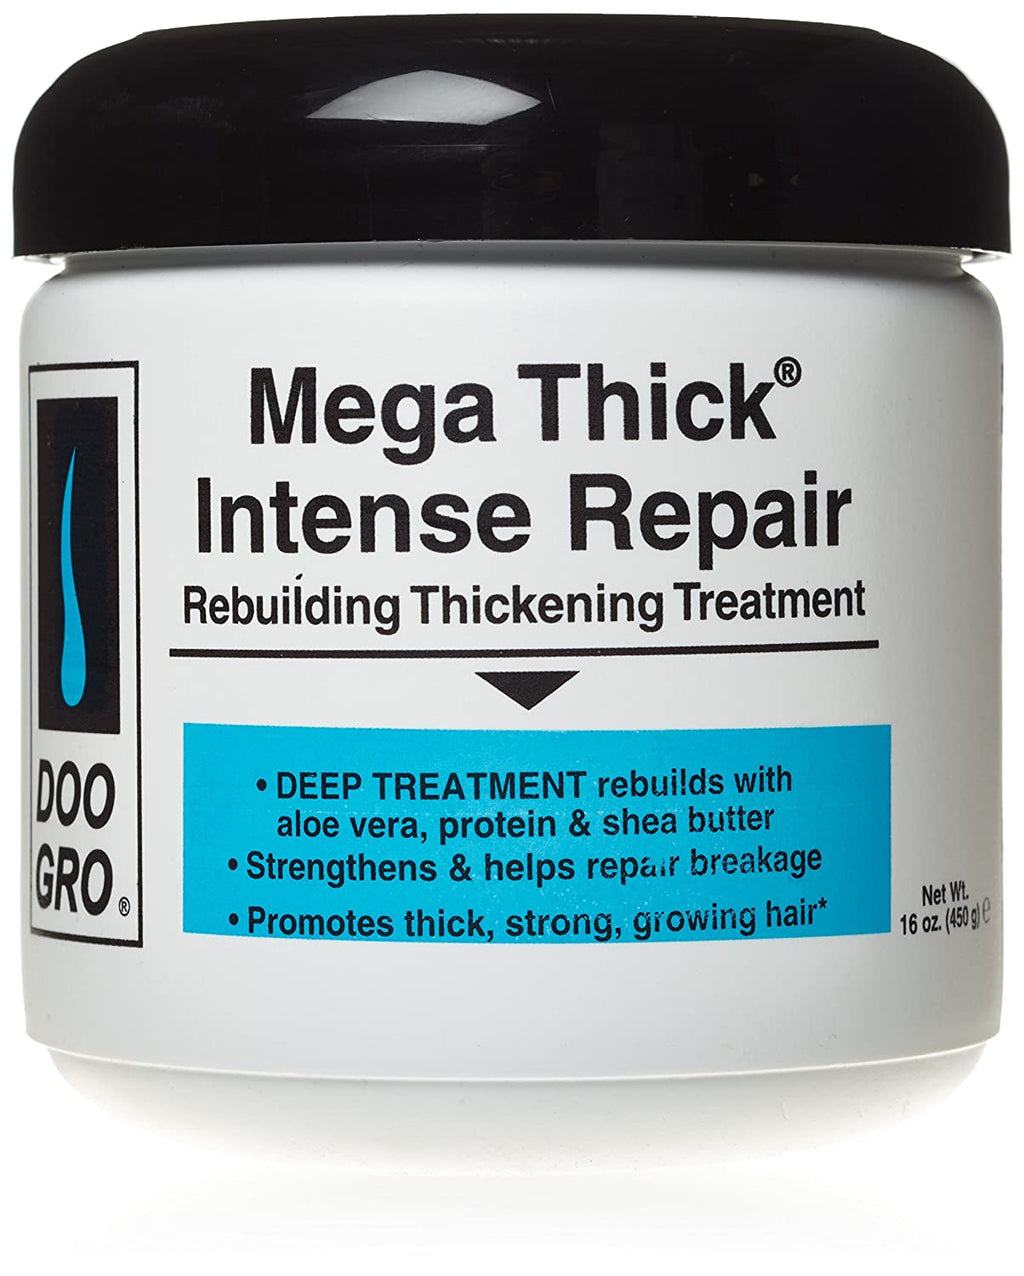 Doo Gro- Mega Thick Intense Repair Rebuilding Thickening Treatment 16oz